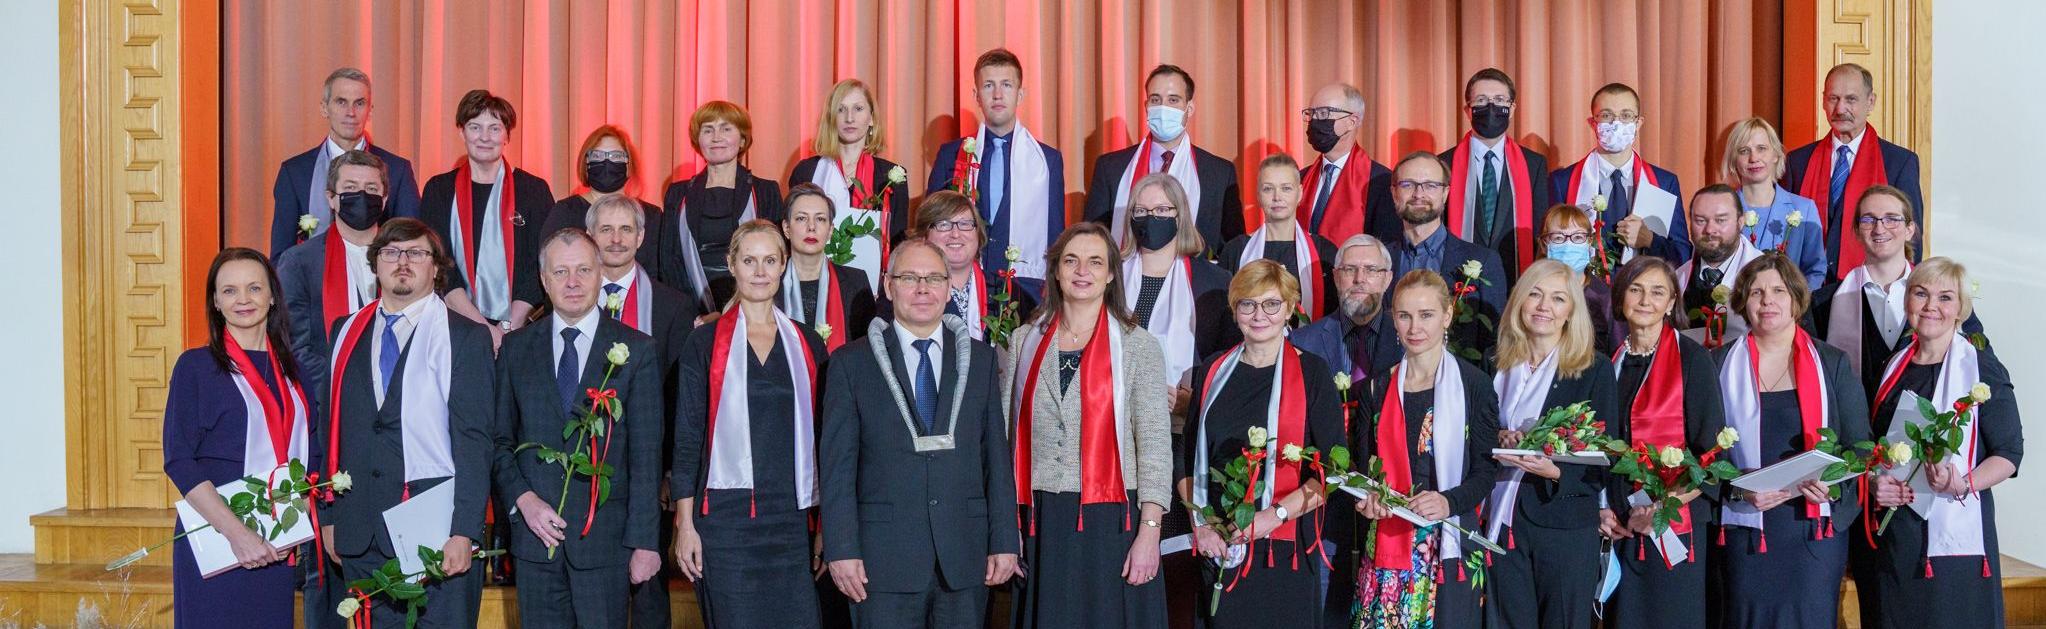 Tallinna Ülikooli doktorid 2020